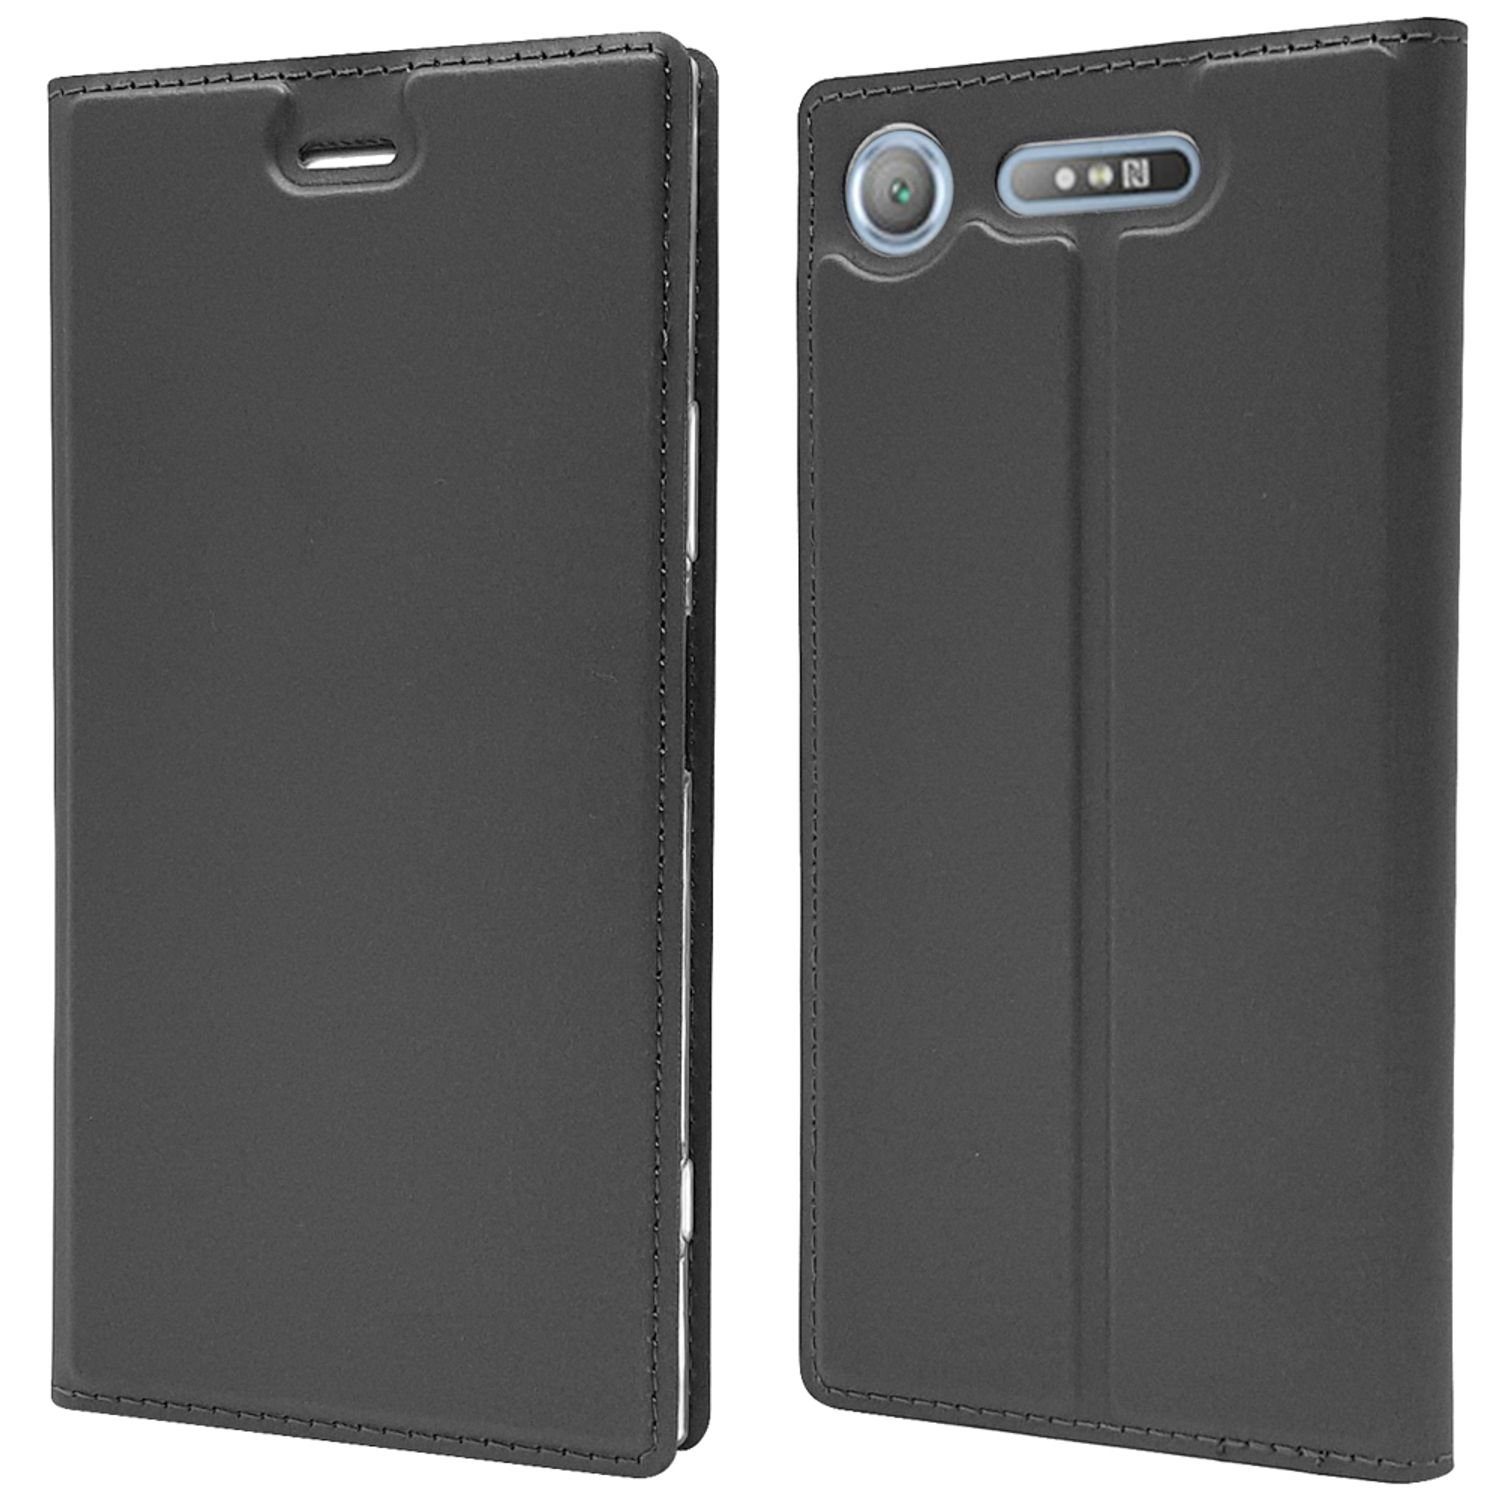 Nalia Smartphone-Hülle Sony Xperia XZ1, Kunstleder Flip Case Hülle / Rundum Schutz Etui / Klapphülle / Wallet